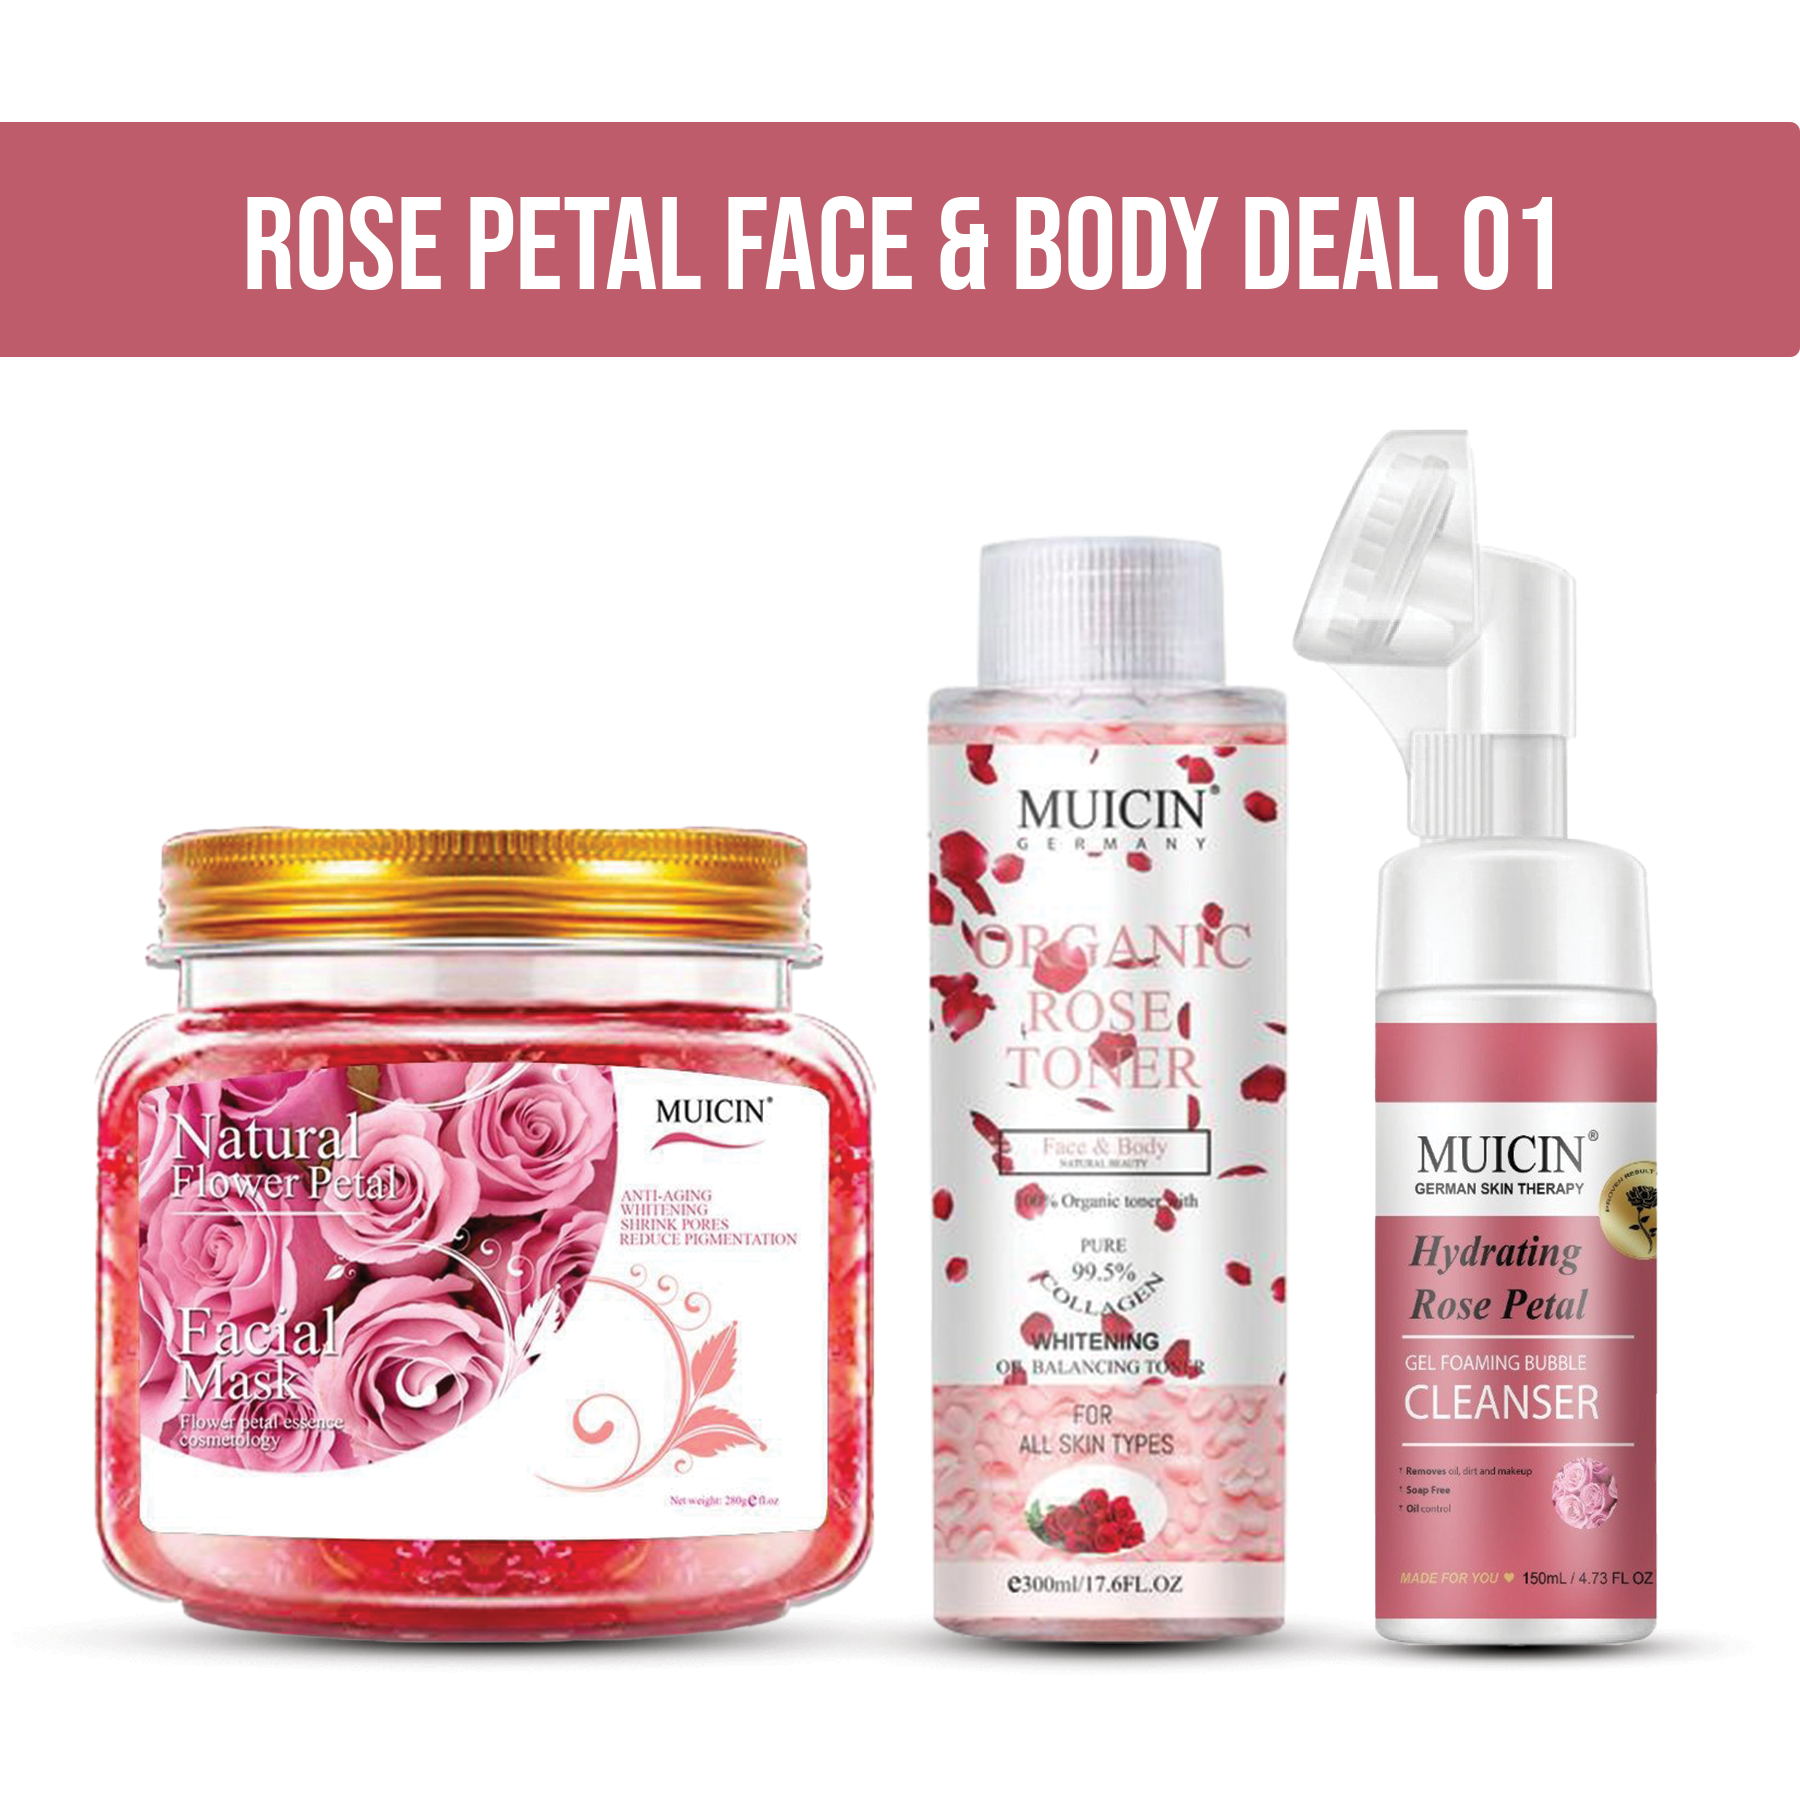 MUICIN - Rose Petal Face & Body Deal - 01